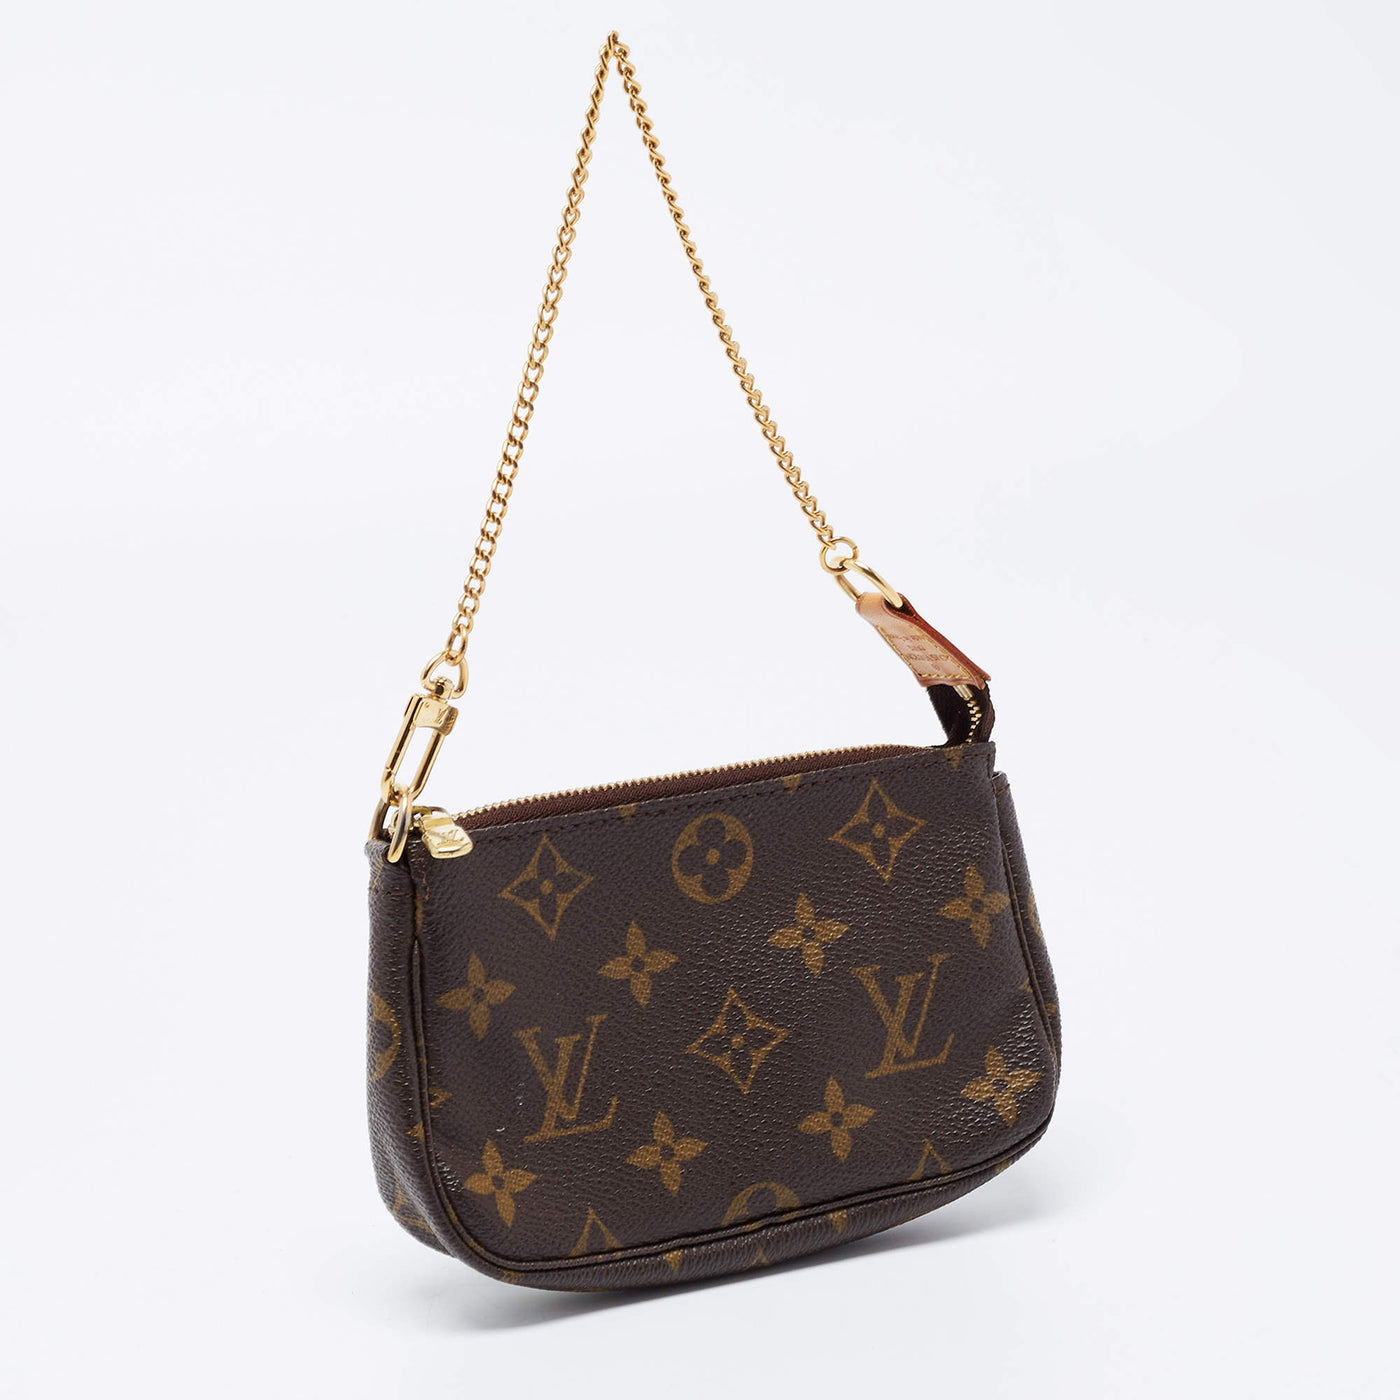 Louis Vuitton Monogram Canvas Mini Pochette Accessories Bag